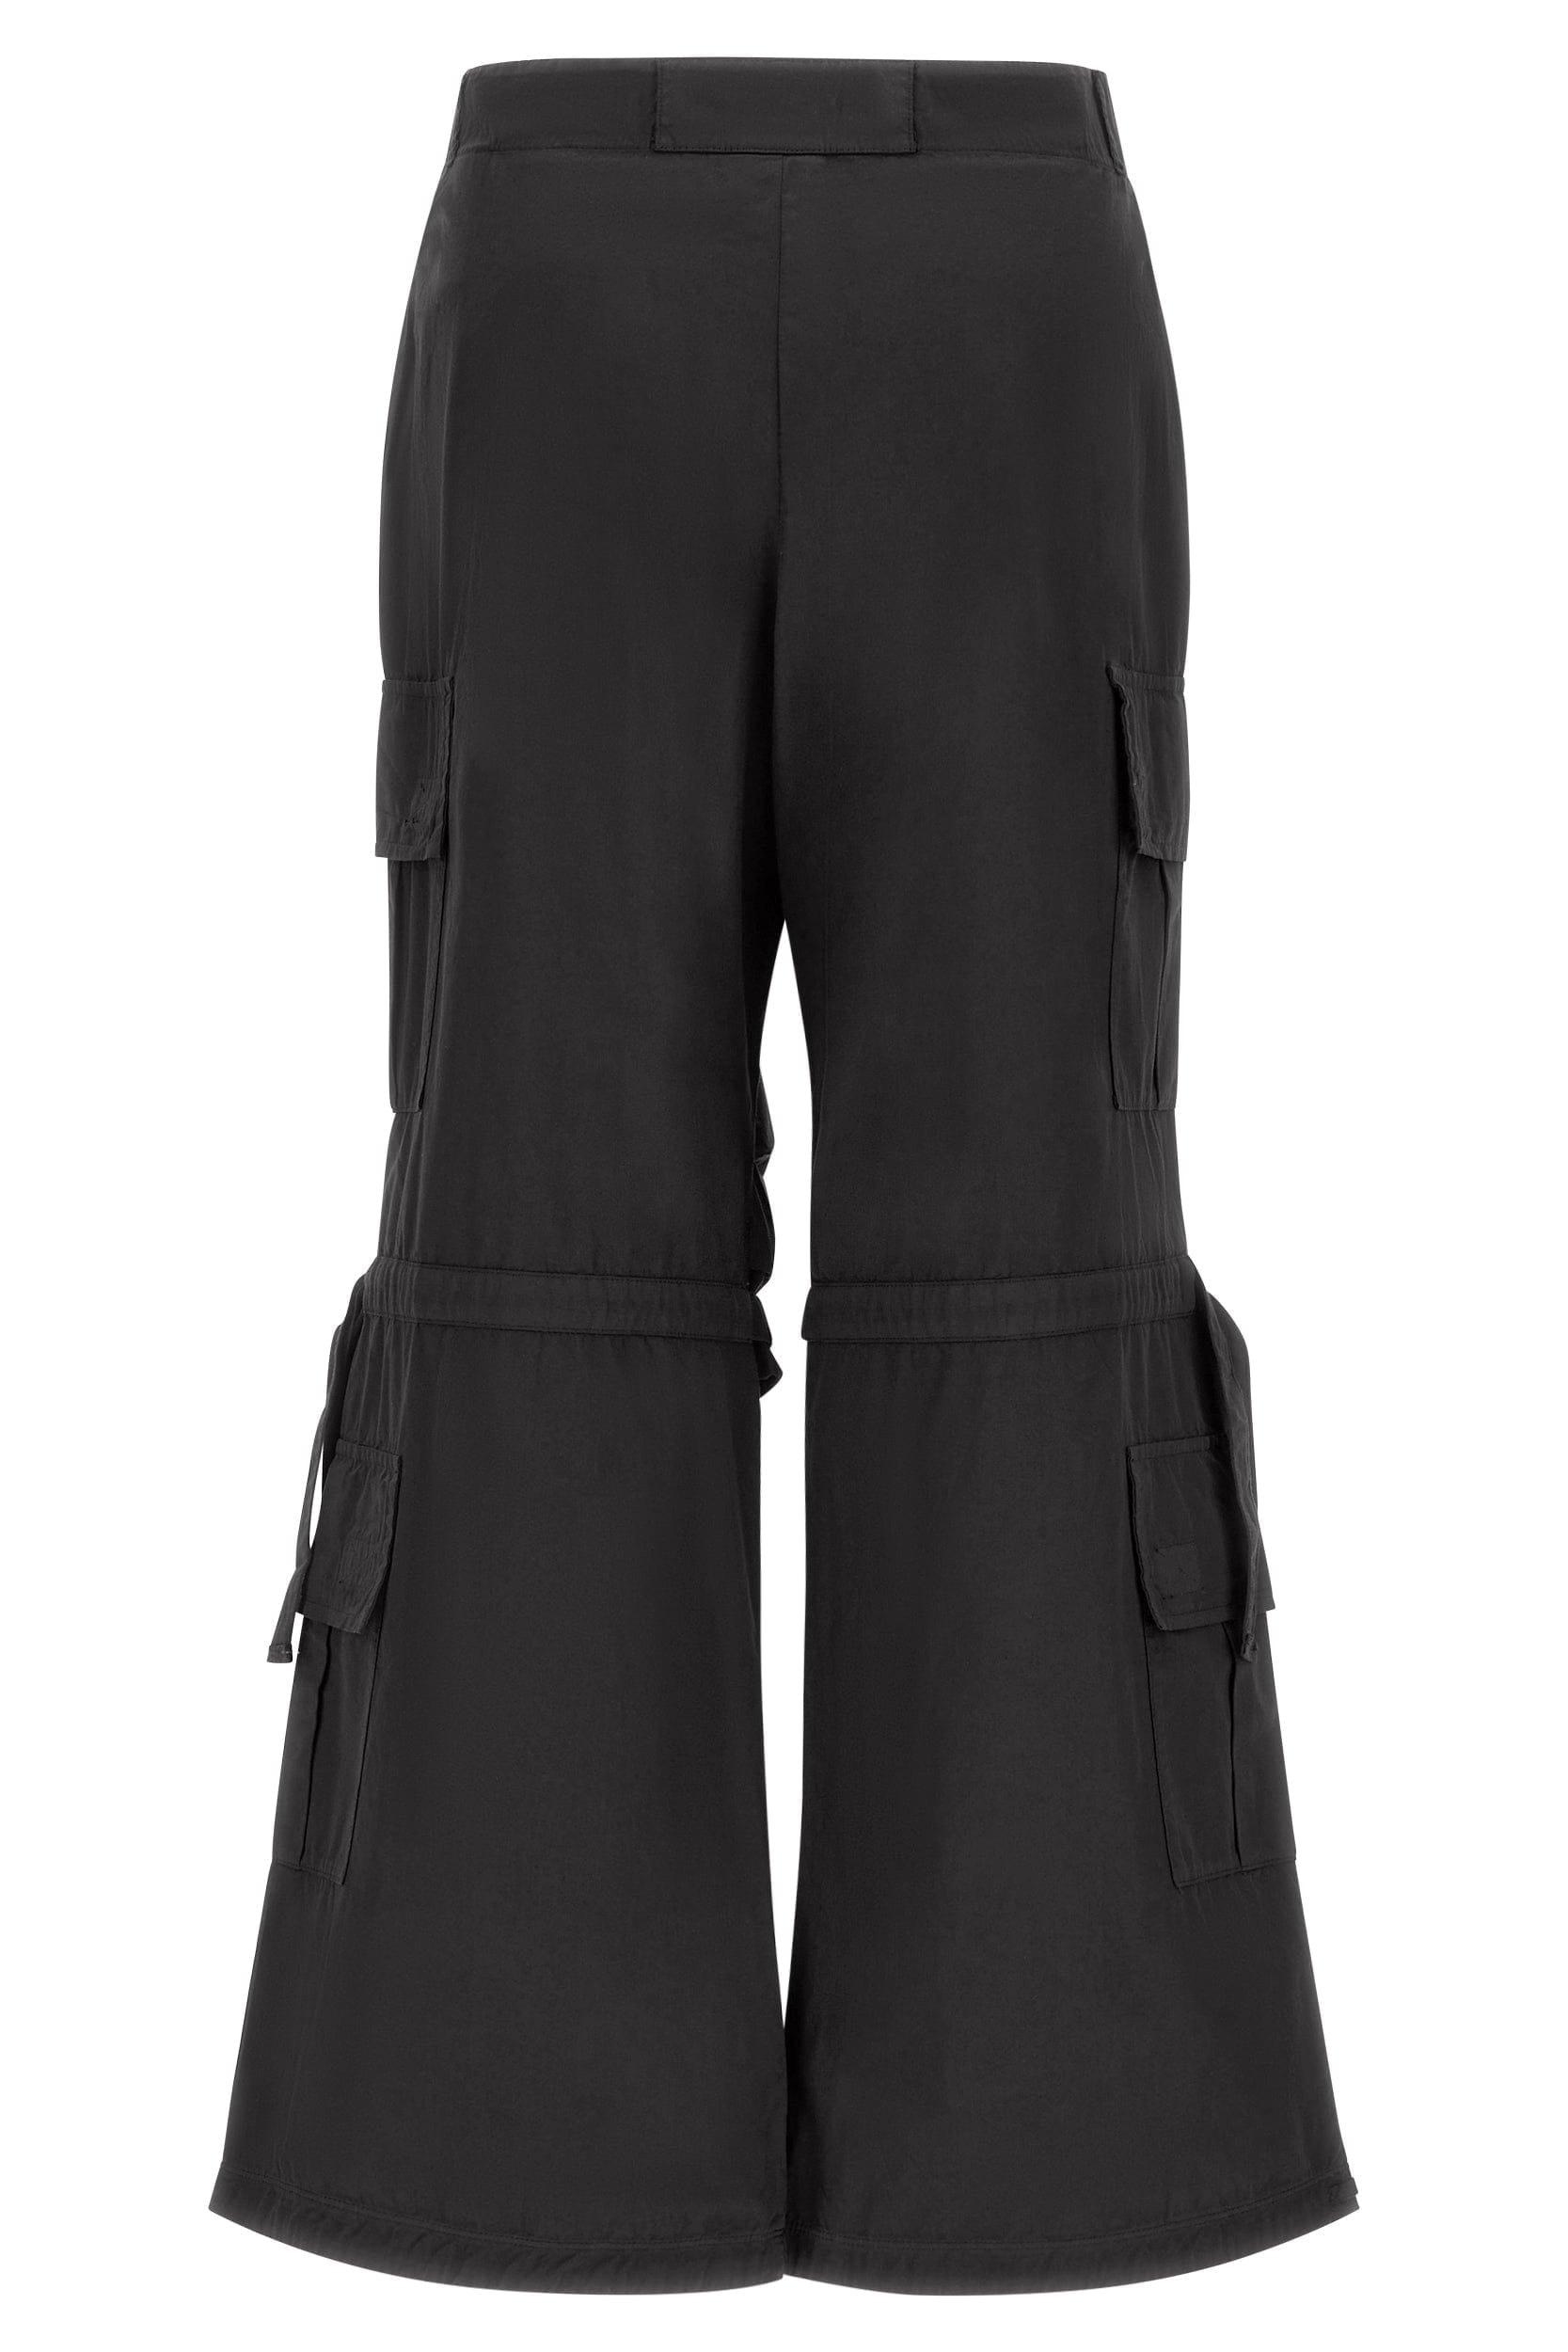 Pantalones cargo - Talle alto - Largo completo - Negro 9